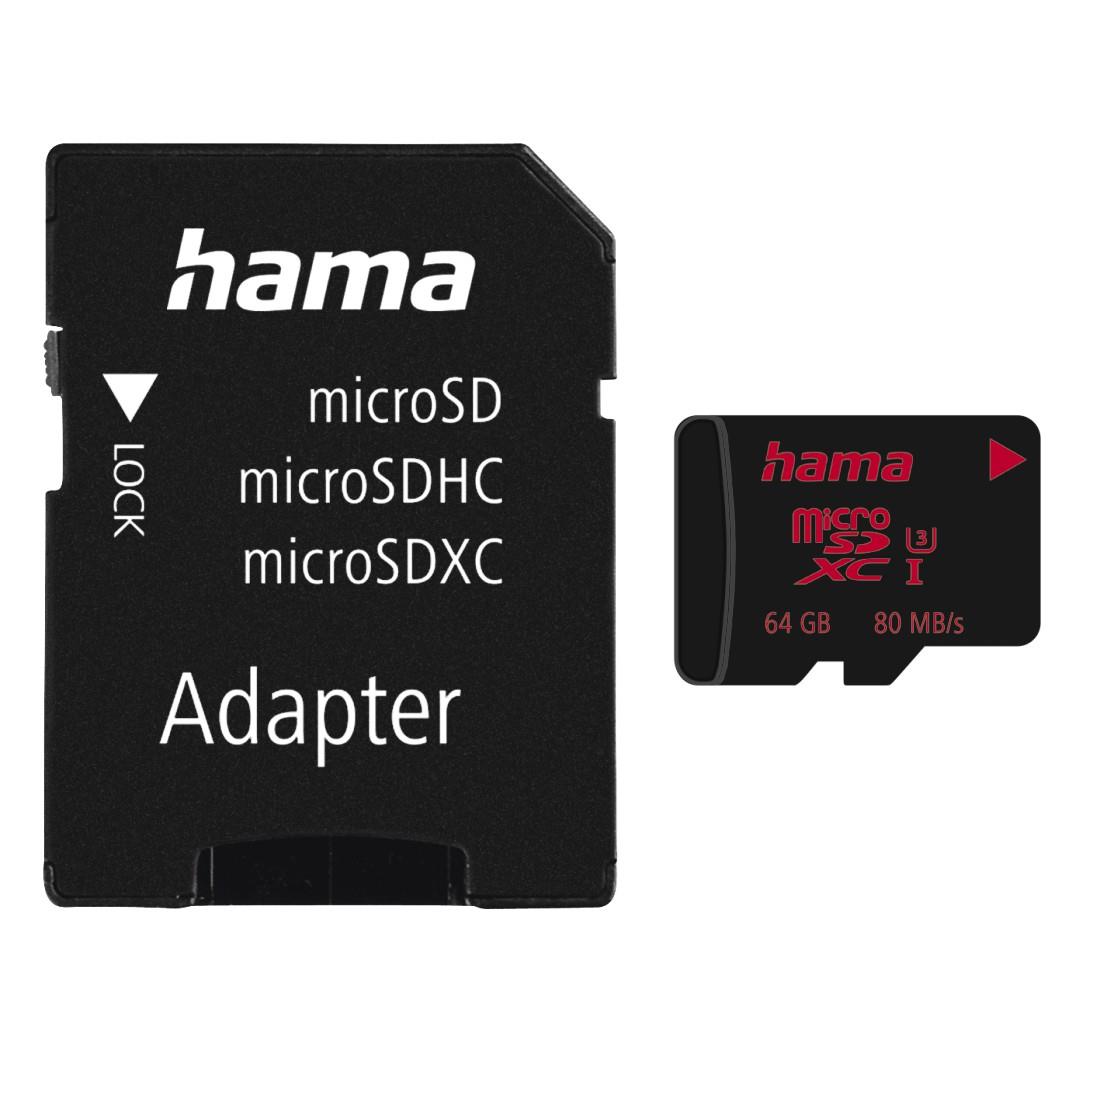 Hama microSDXC 64GB UHS Speed Class 3 UHS-I 80MB/s + Adapter/Mobile